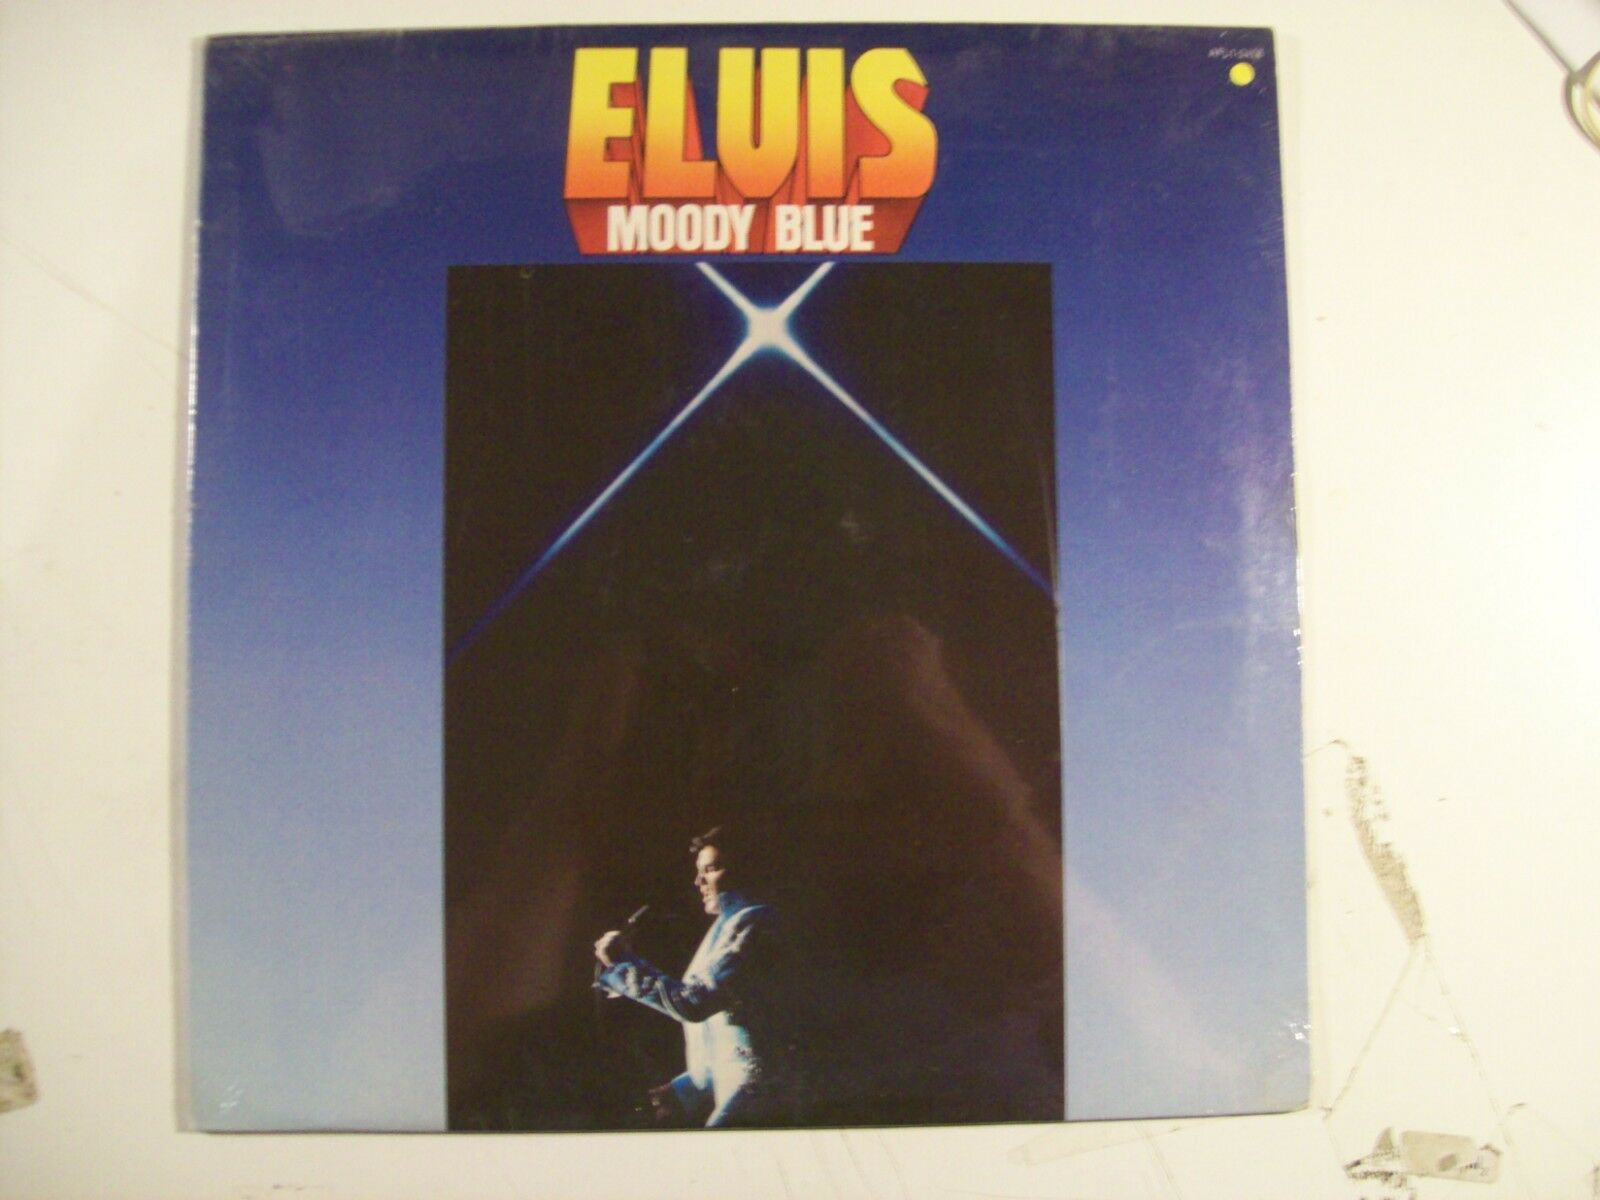 1977 Elvis Presley - Moody Blue  AFL-2428  EXPERIMENTAL YELLOW VINYL